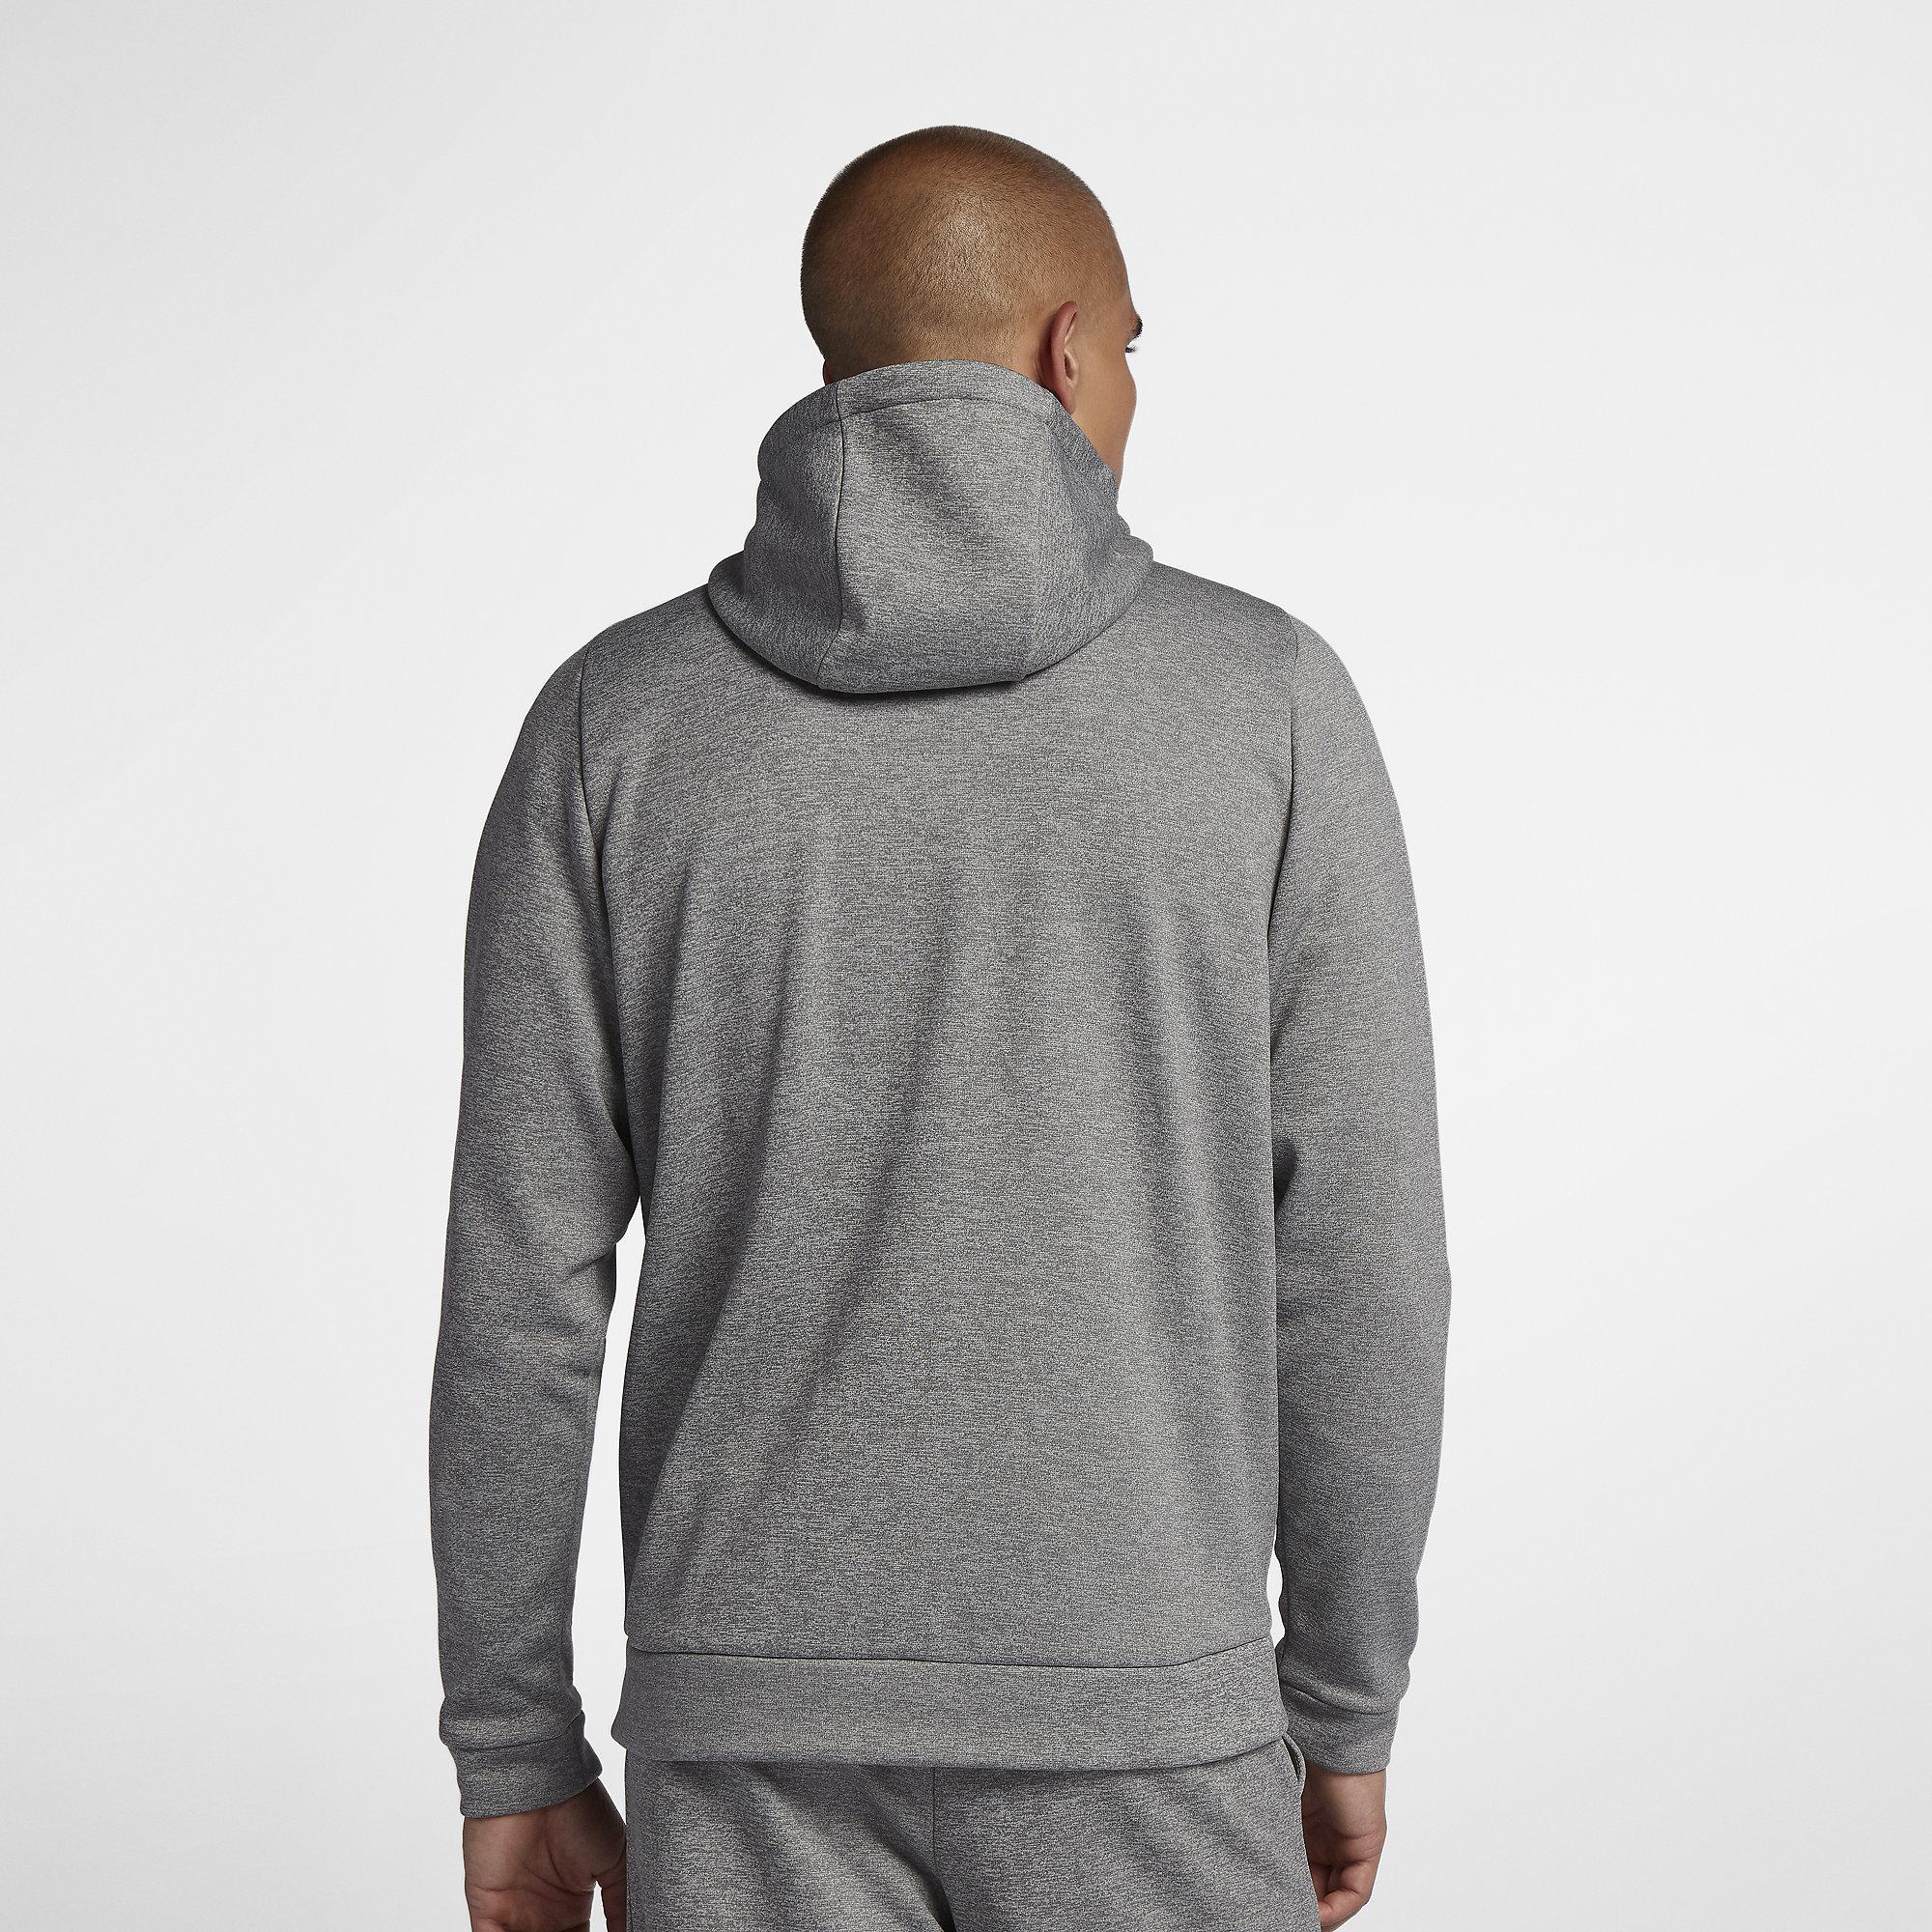 Nike Mens Therma Full Zip Hoodie - Dark Grey/Black - Tennisnuts.com